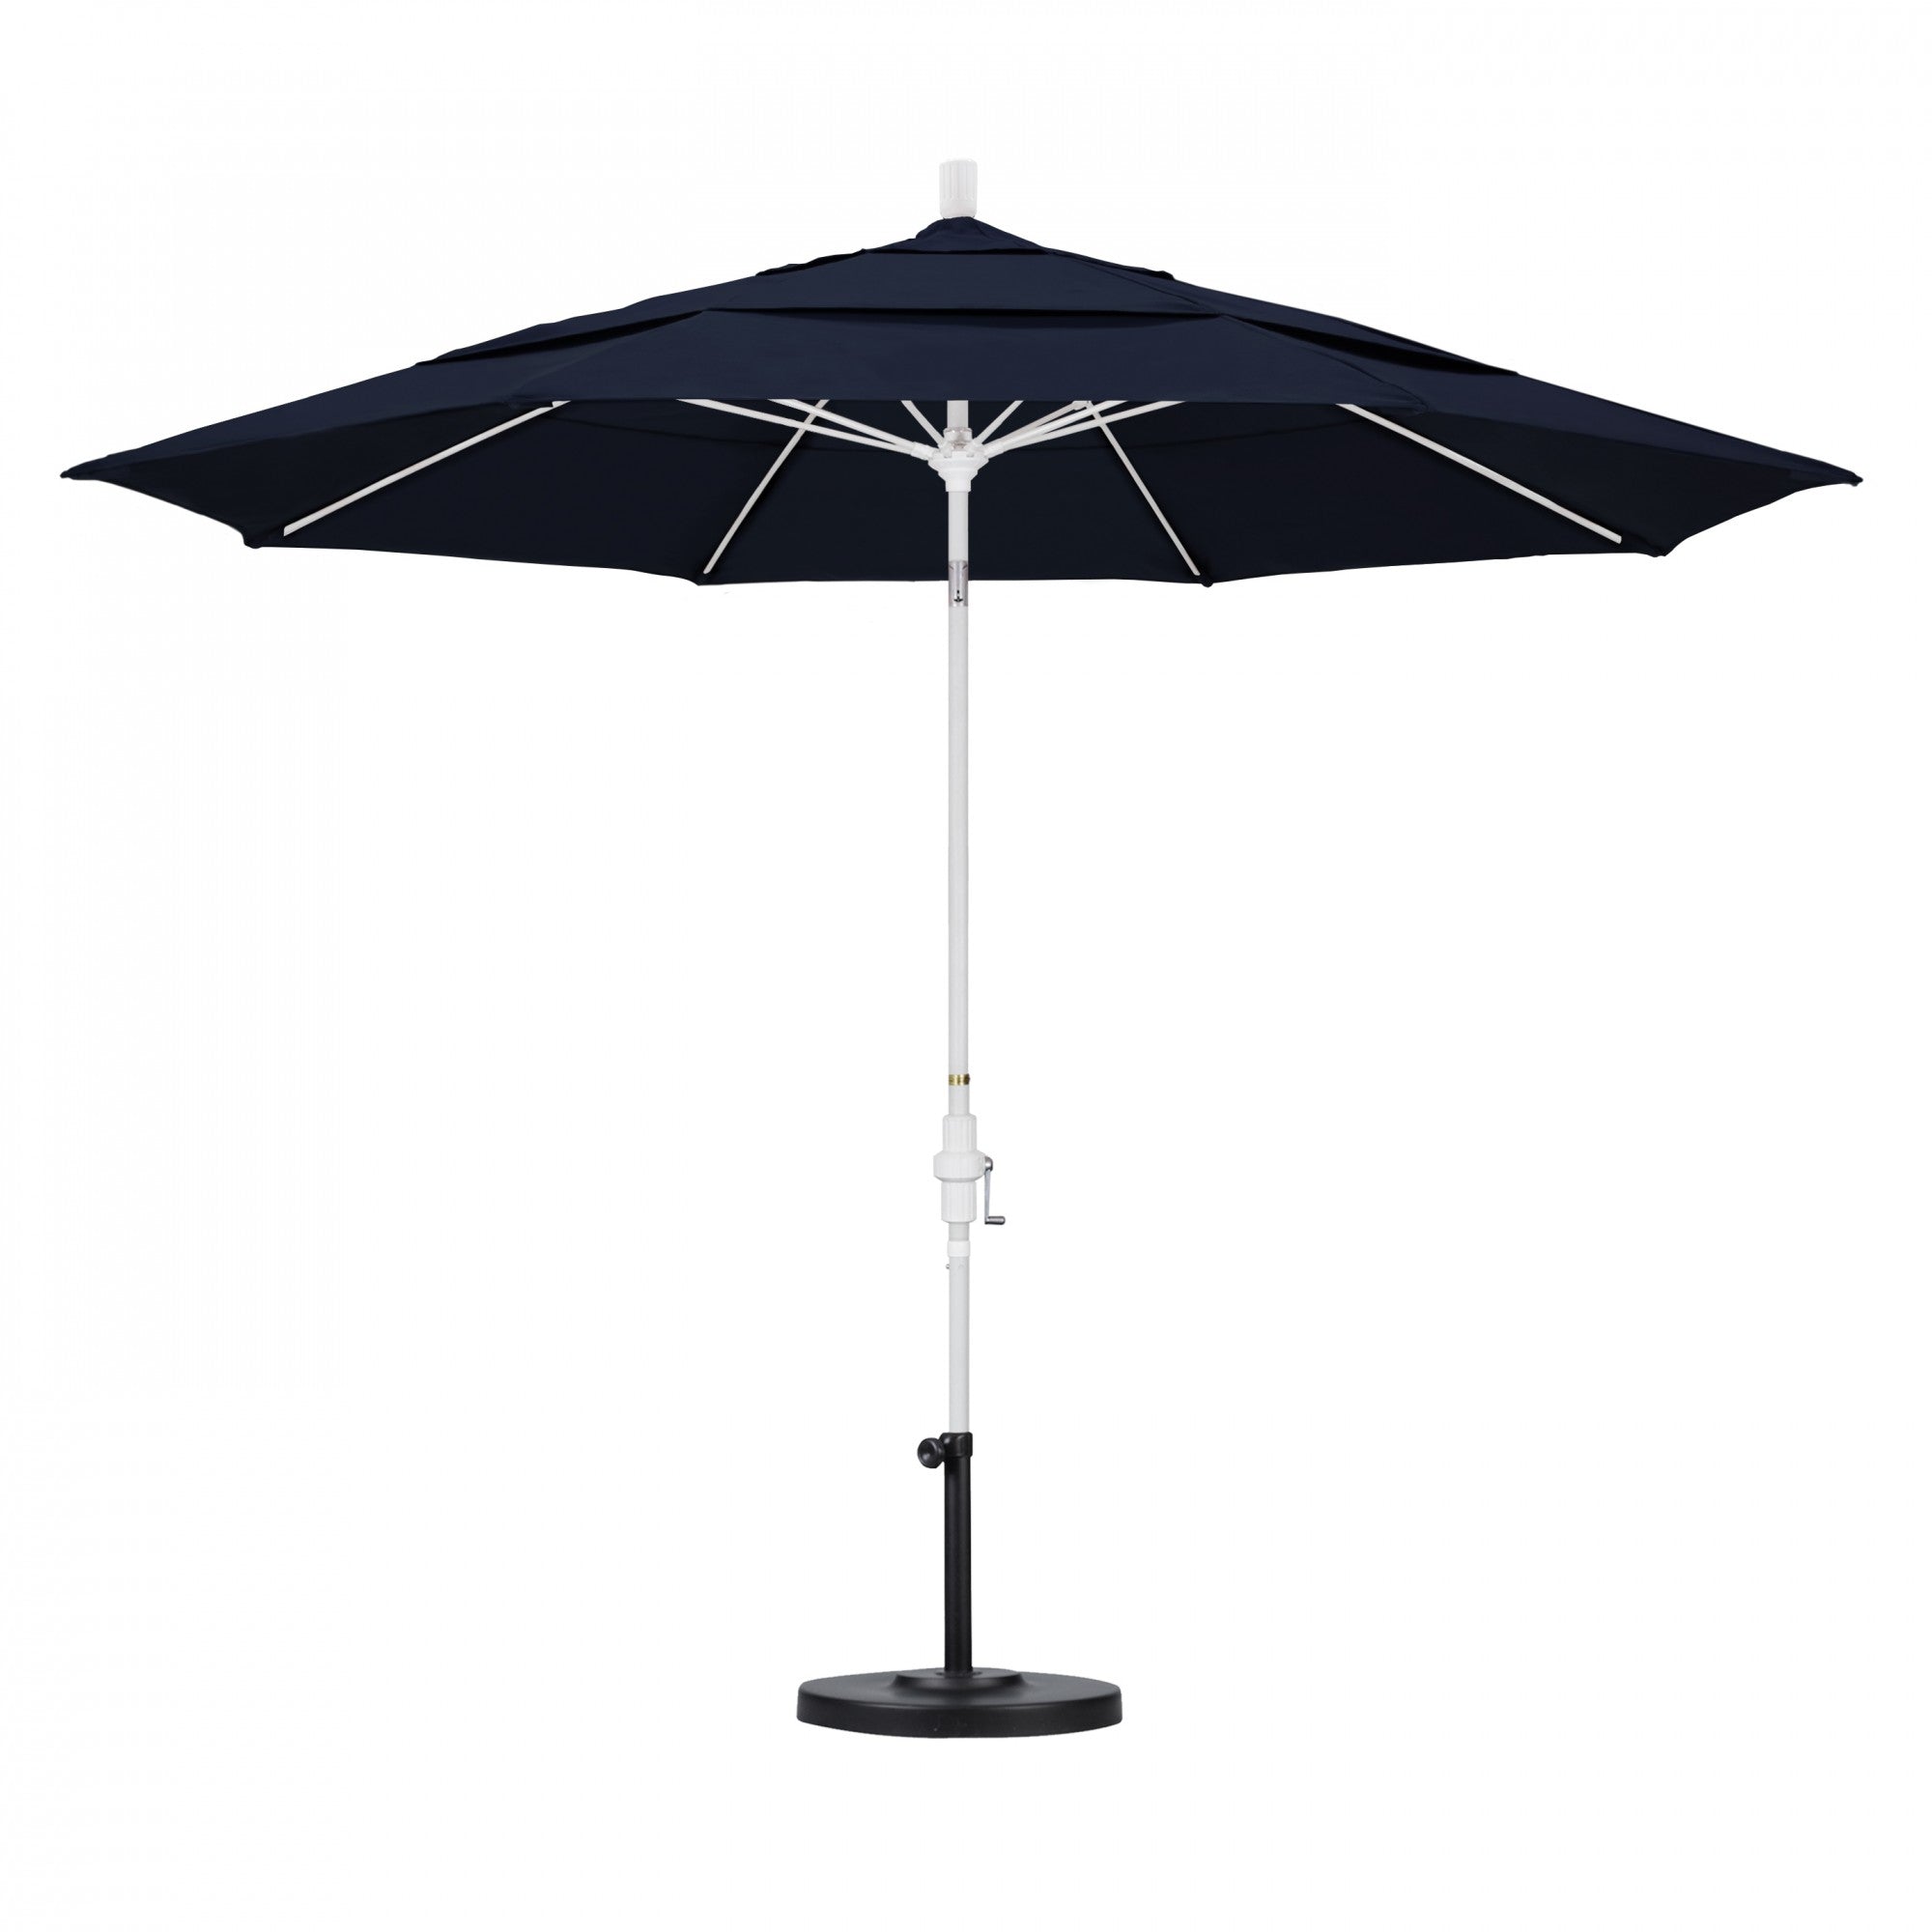 California Umbrella - 11' - Patio Umbrella Umbrella - Aluminum Pole - Navy Blue - Pacifica - GSCUF118170-SA39-DWV